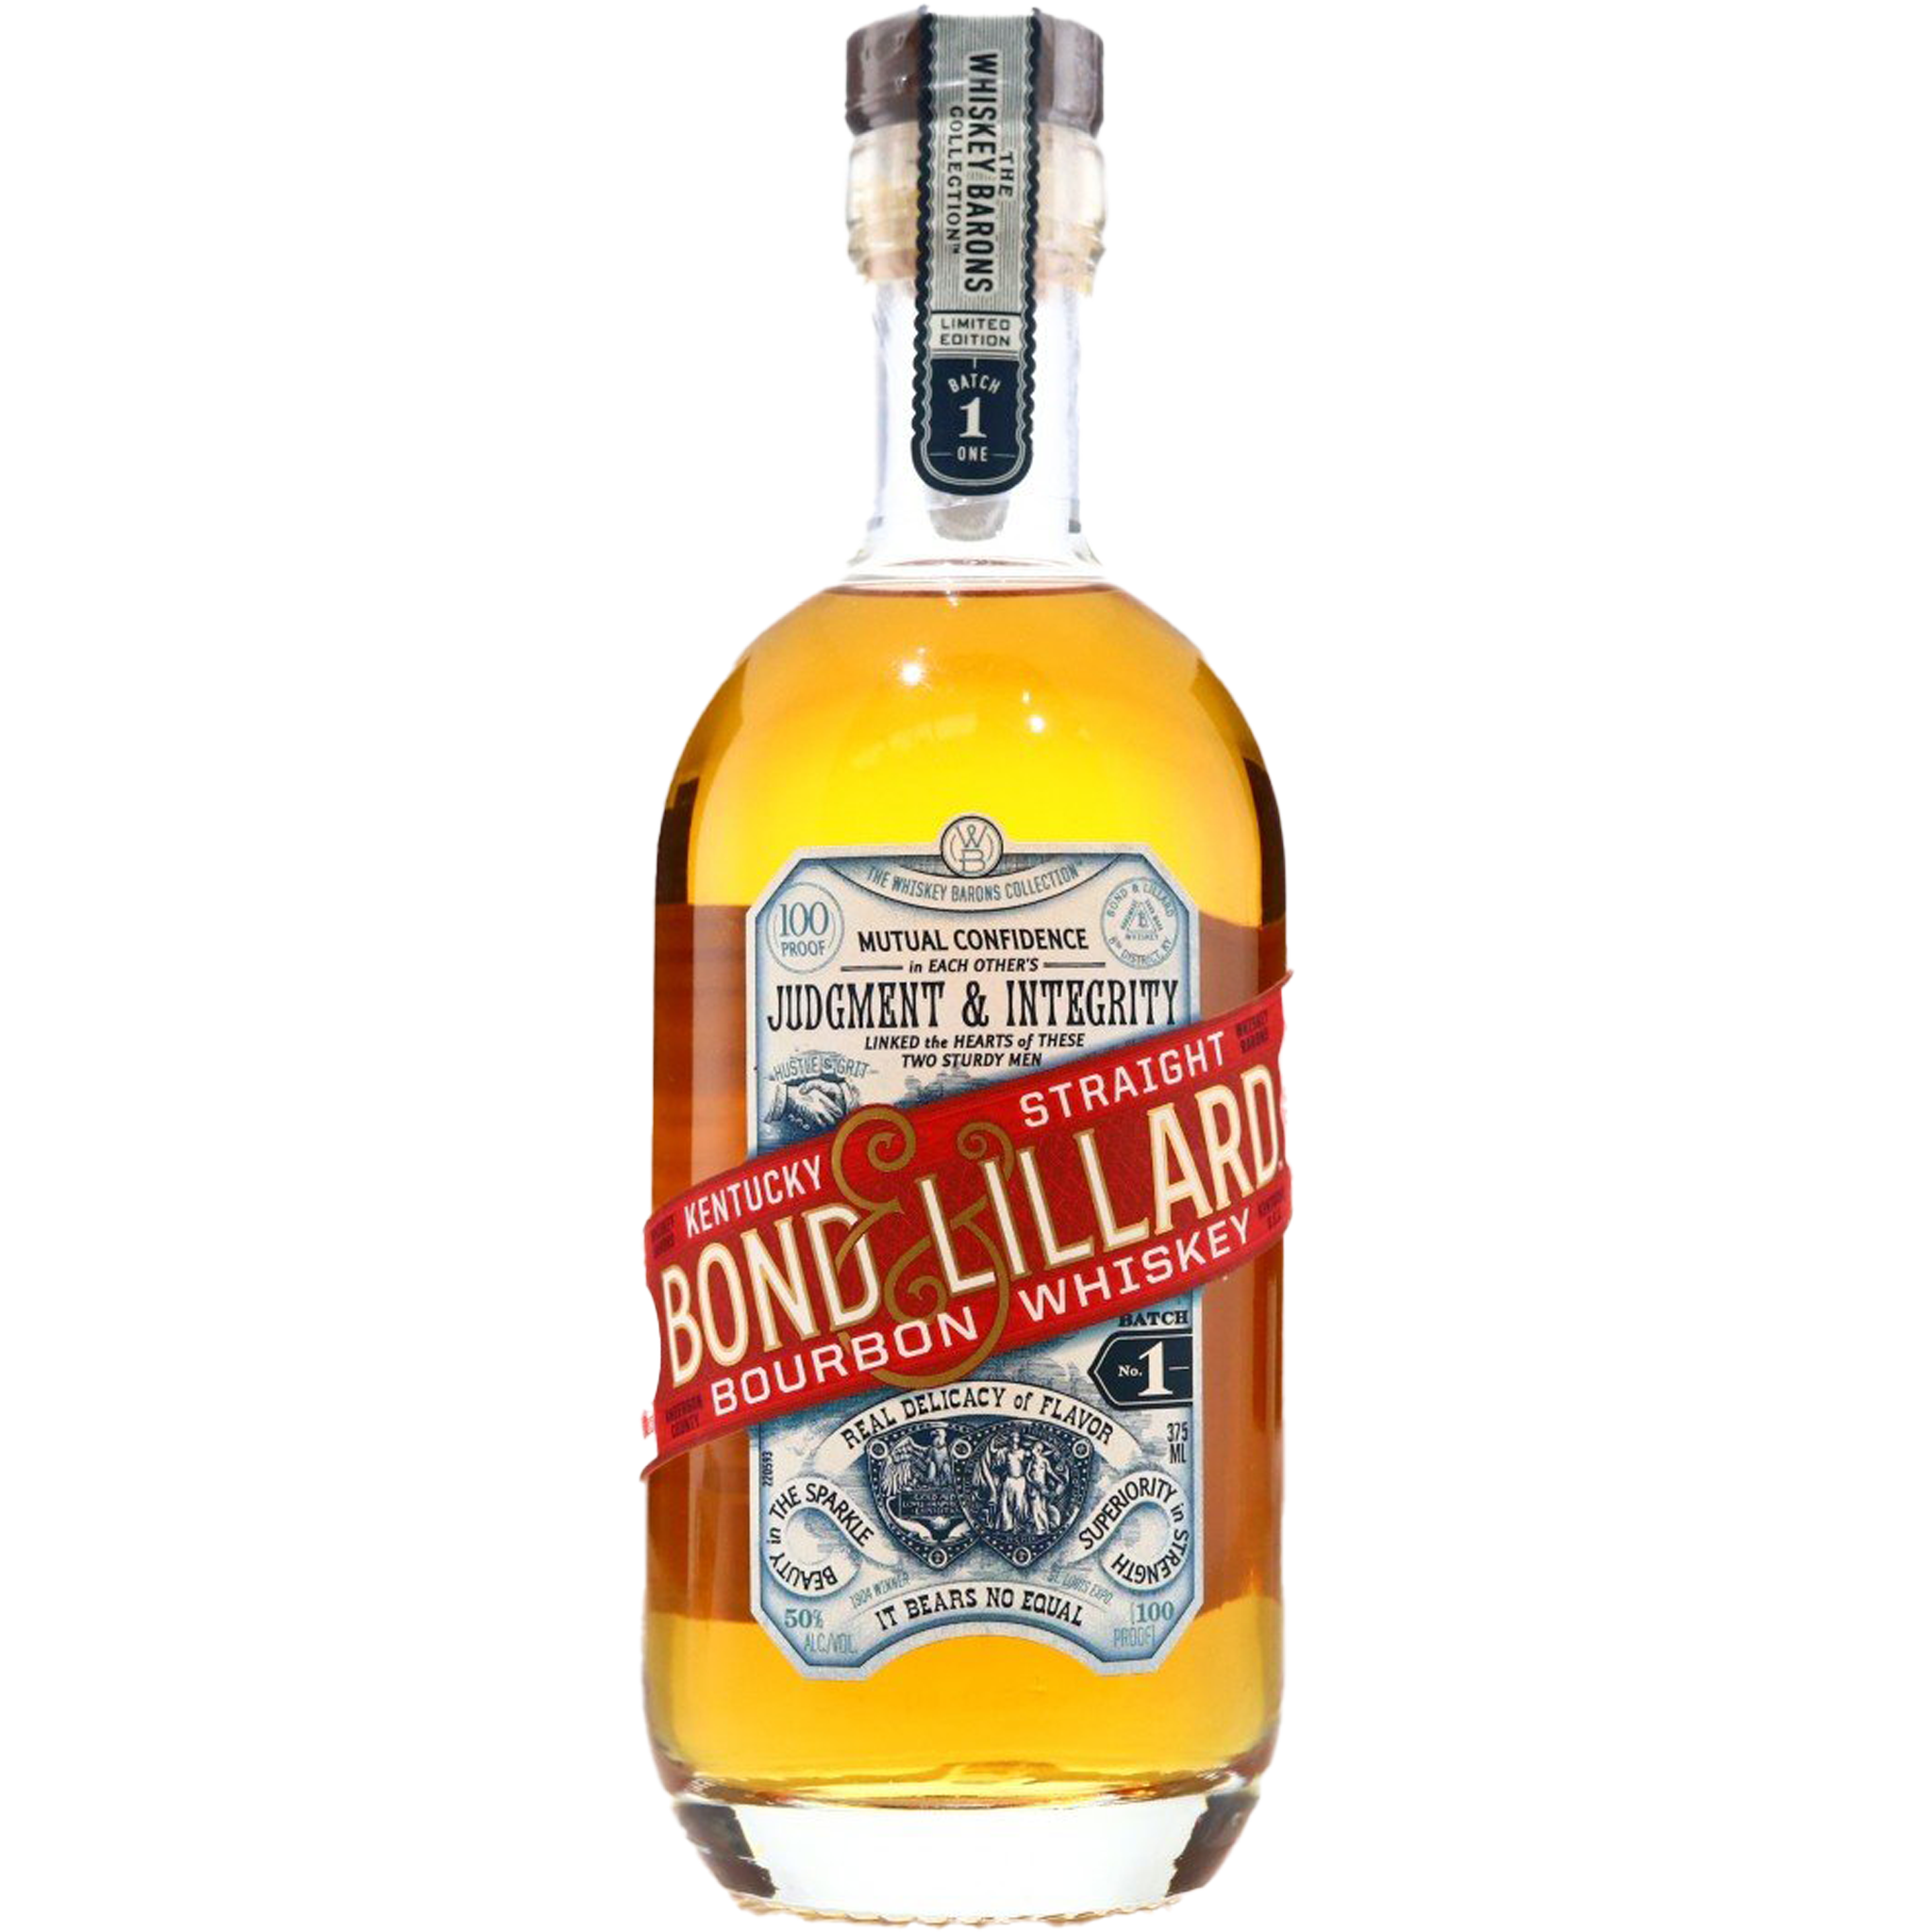 Wild Turkey  Bond & Lillard Kentucky Straight Bourbon Whiskey Batch 1